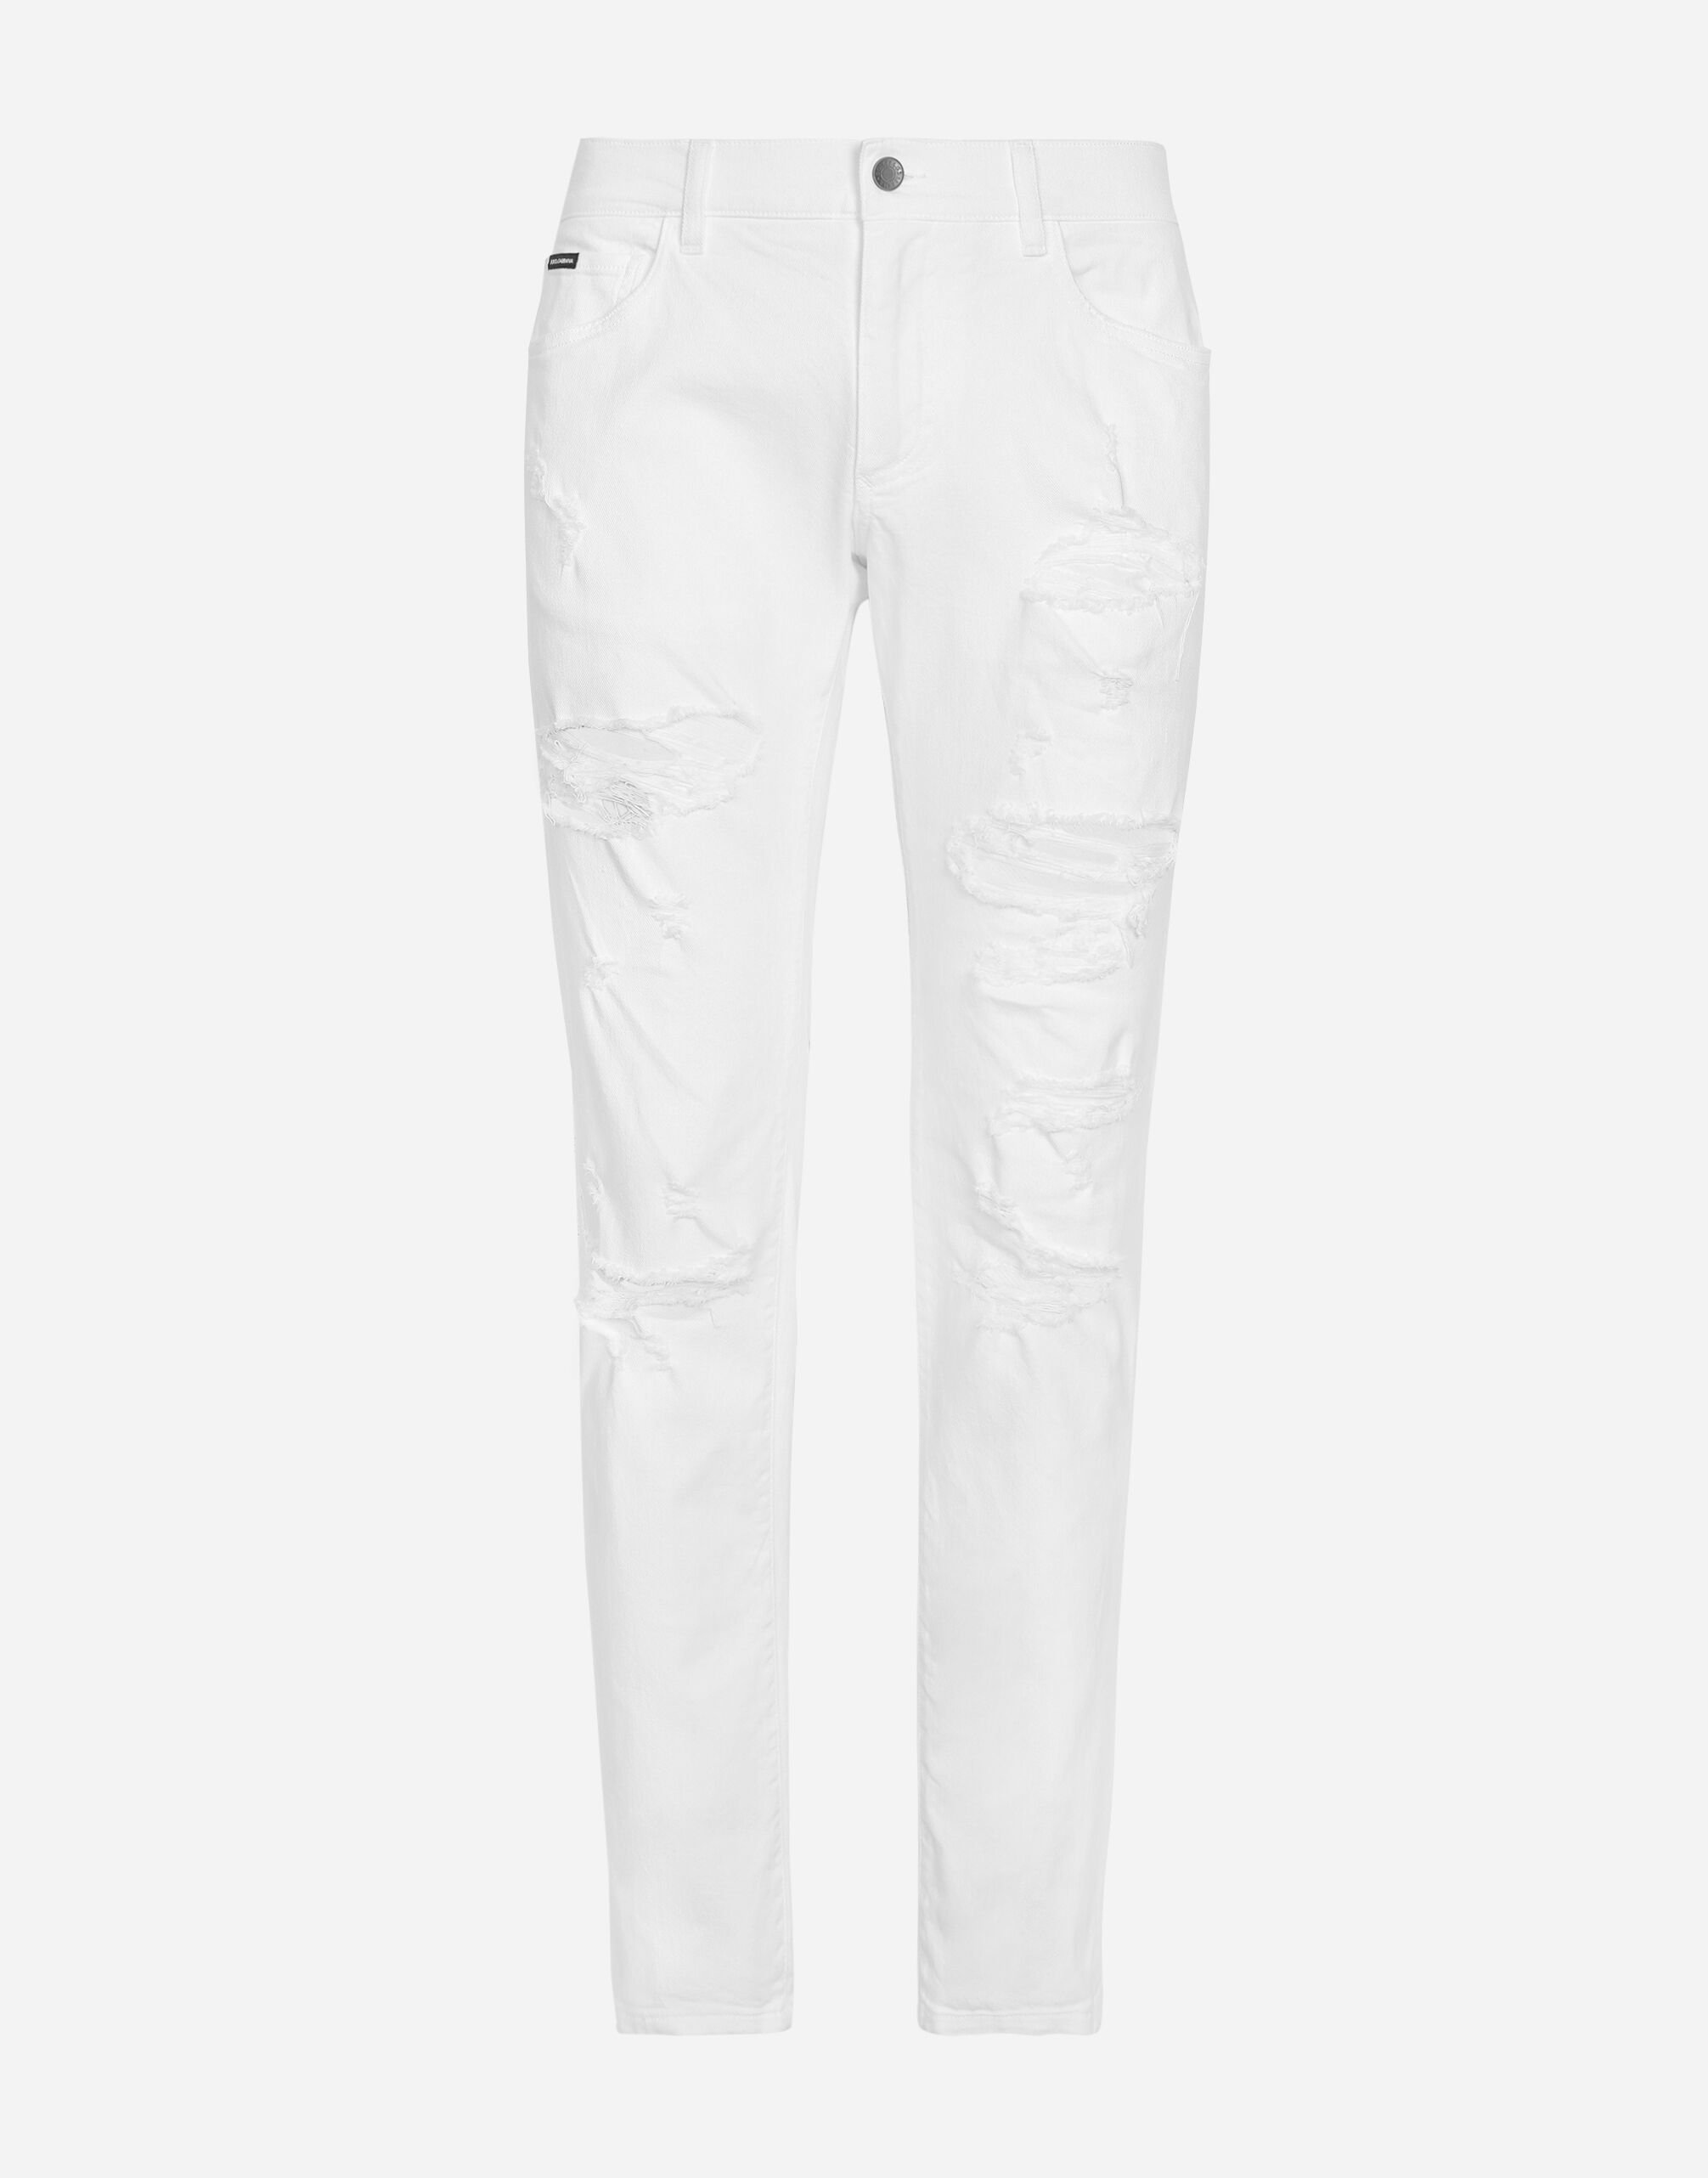 Dolce & Gabbana جينز سكيني مرن أبيض متعدد الألوان G9NL5DG8GW9